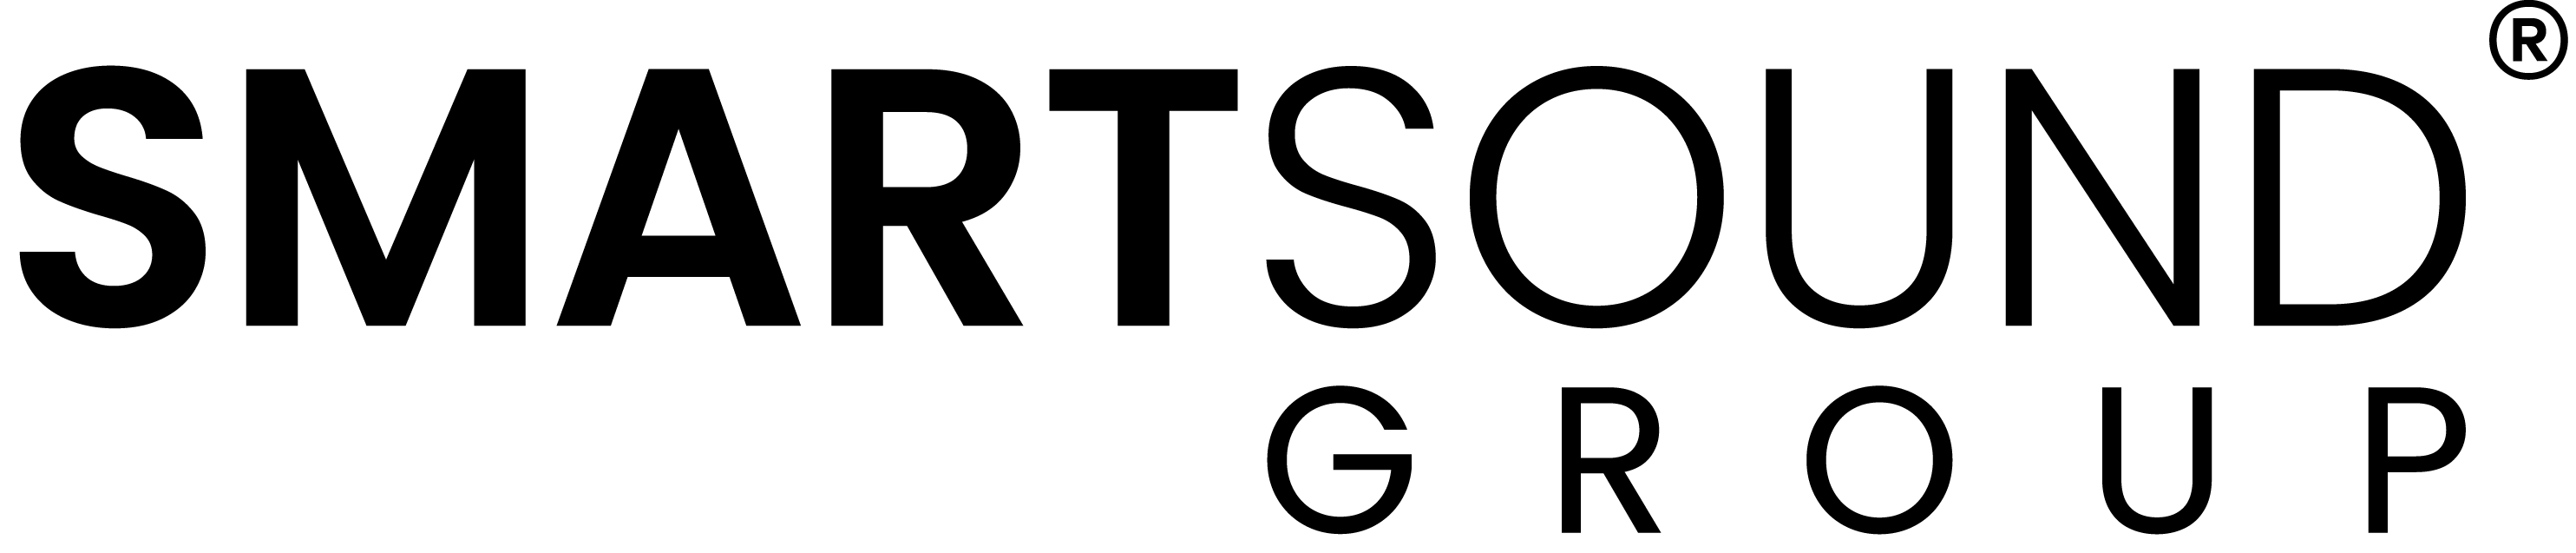 Smartsound Group Logo